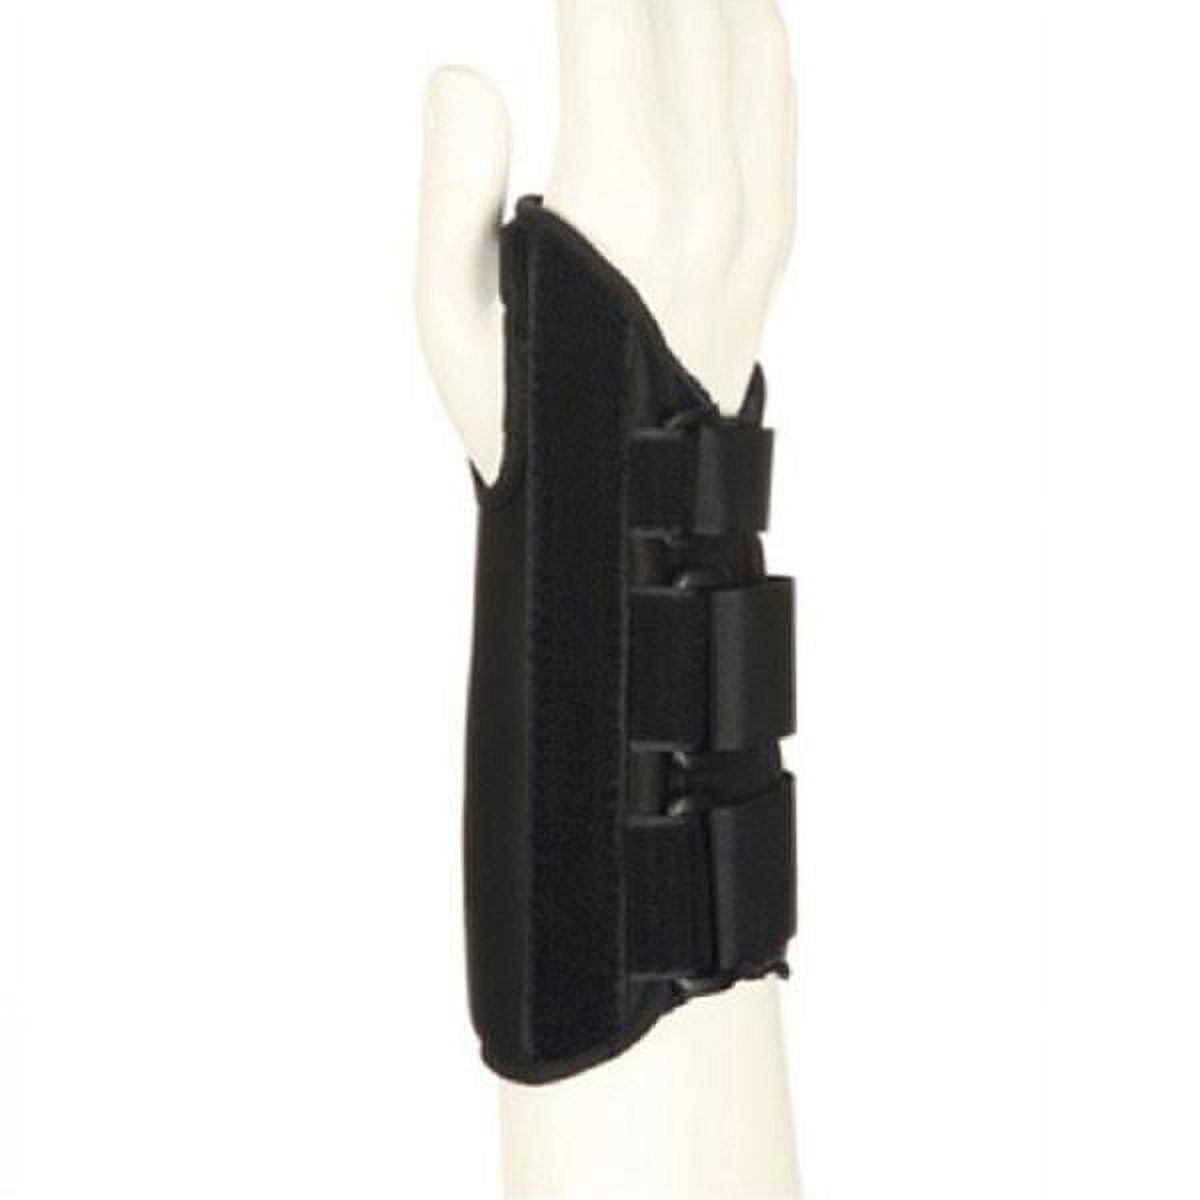 Right Wrist Brace, One size – Personnelle : Orthopedics